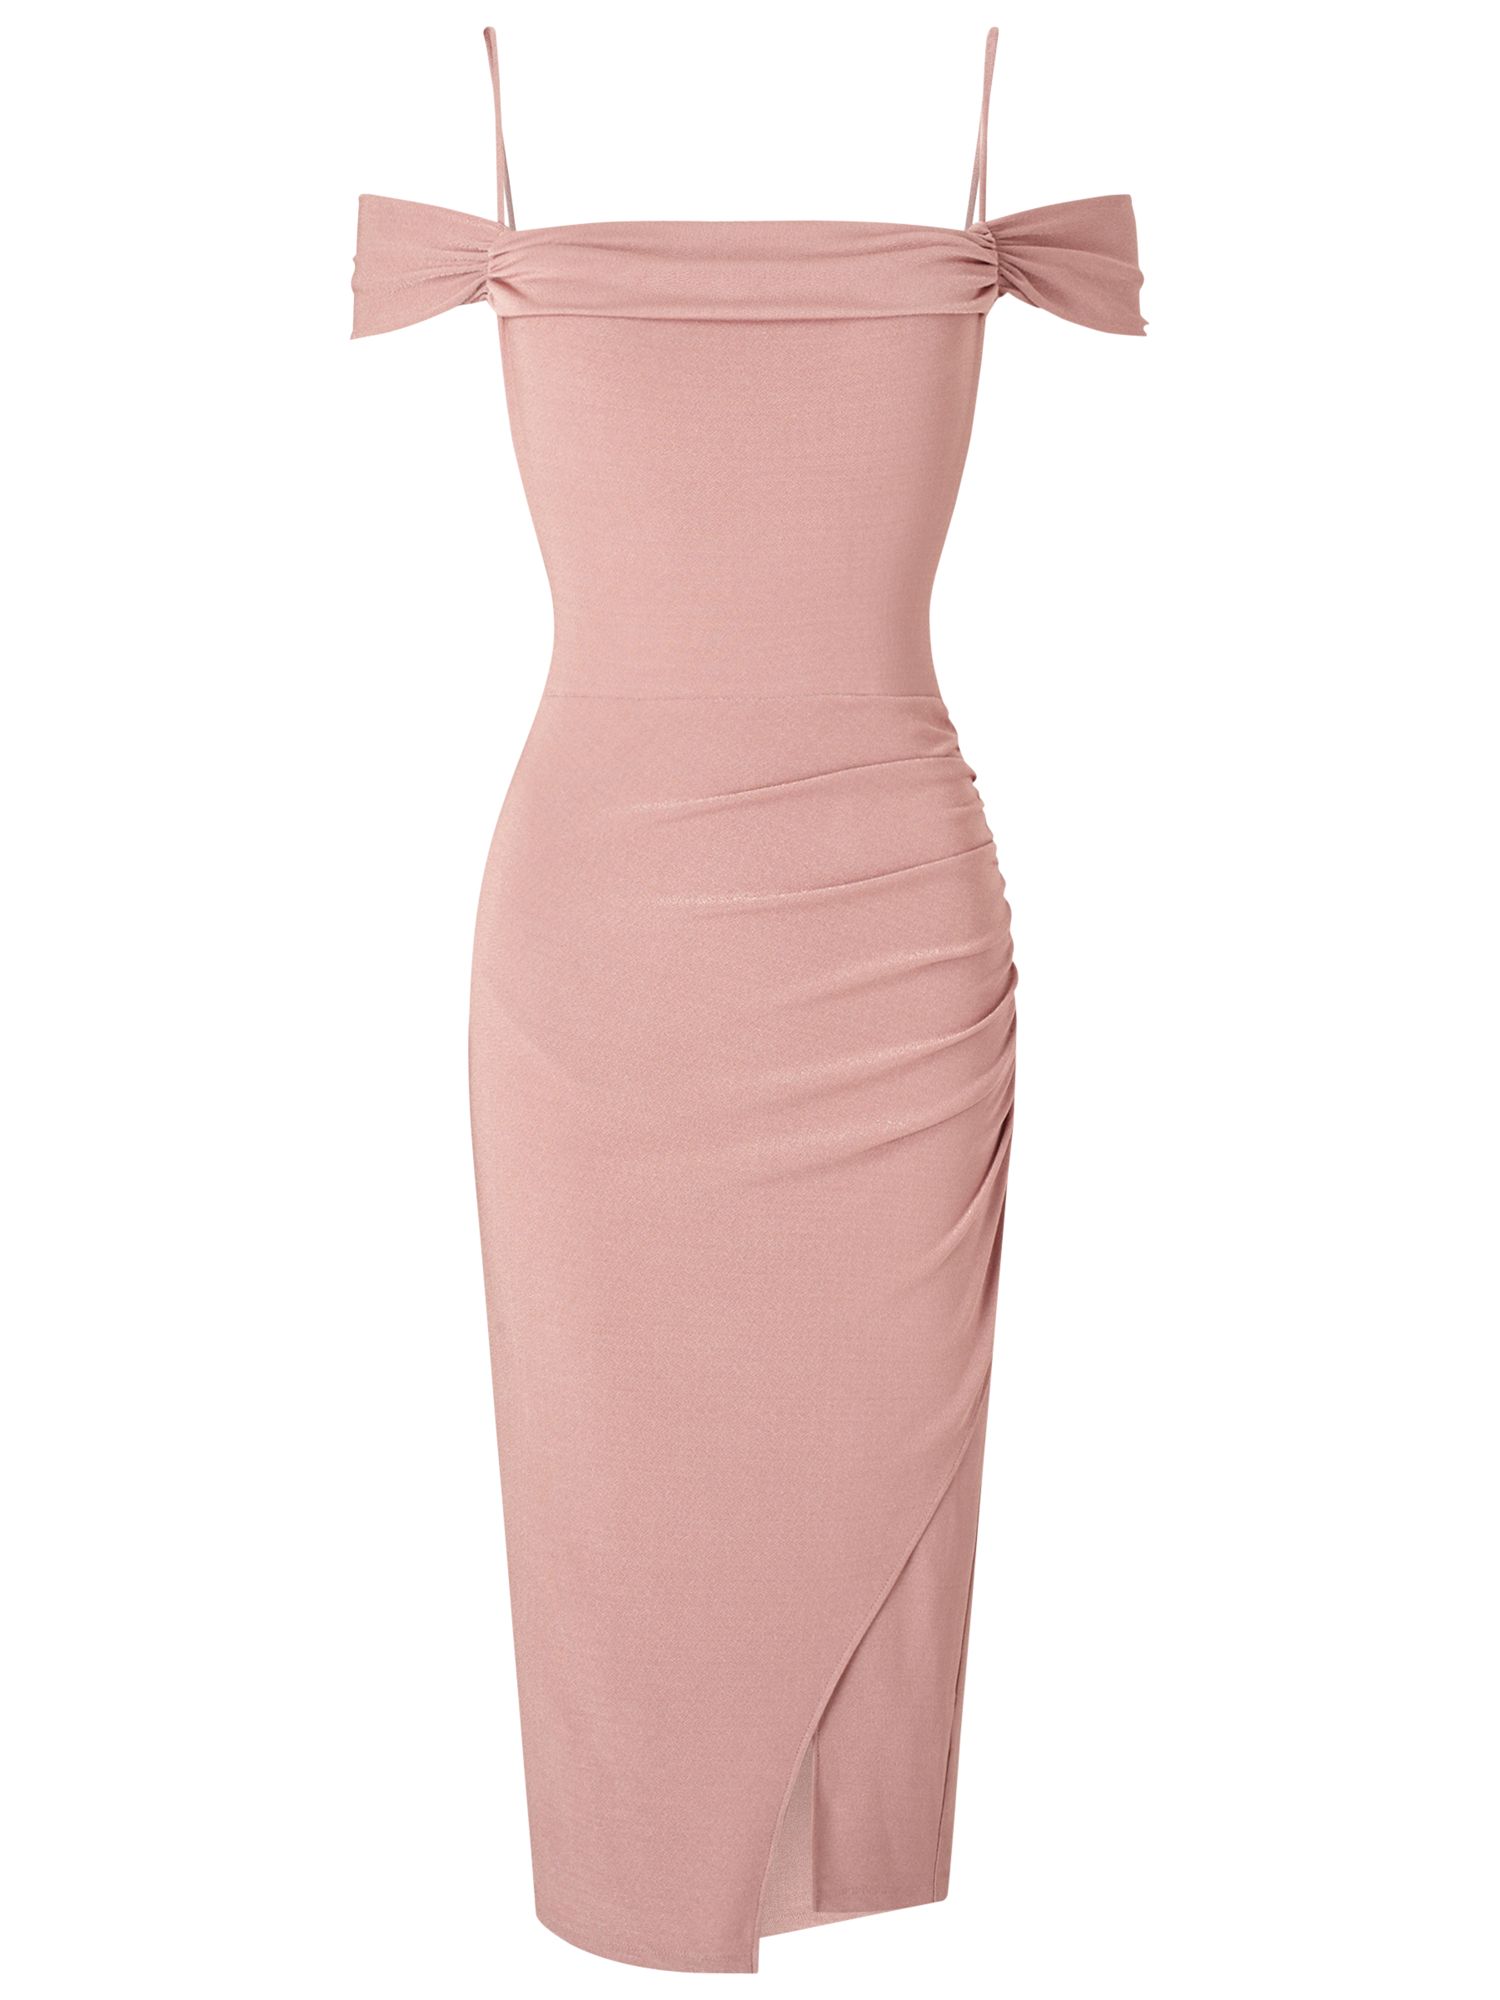 miss selfridge pink dress